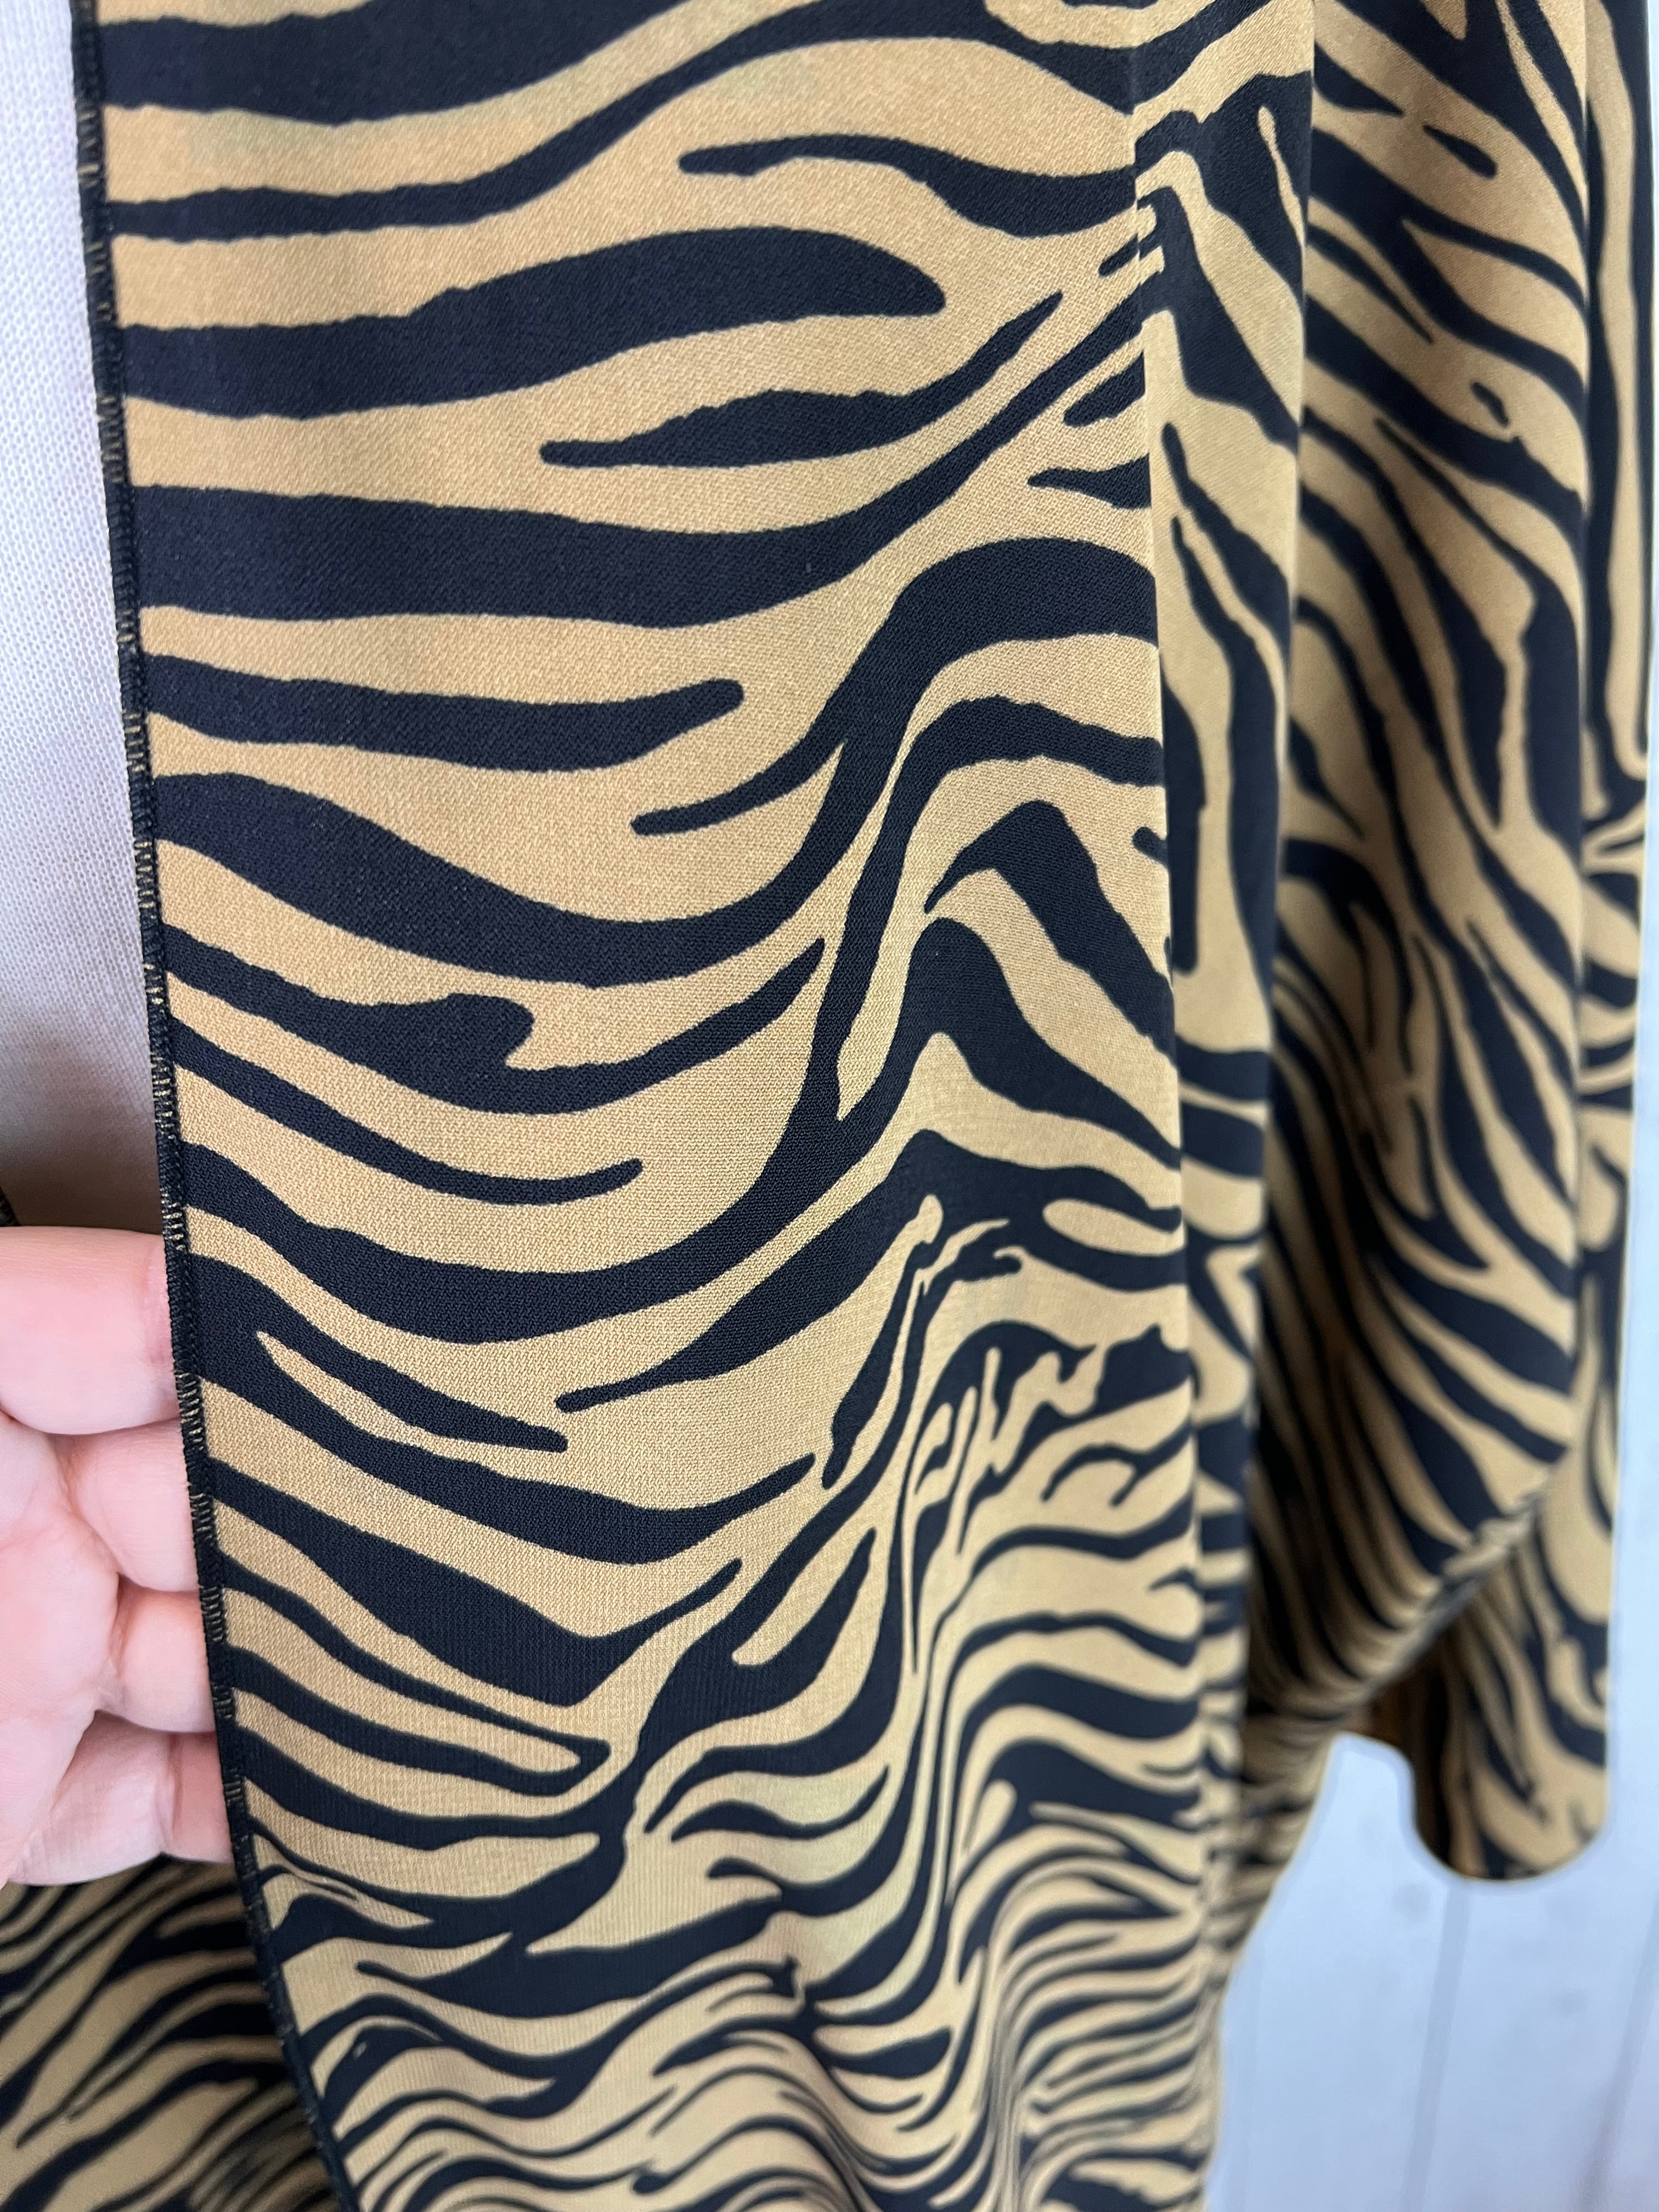 Zebra Print Sleeved Duster Kimono